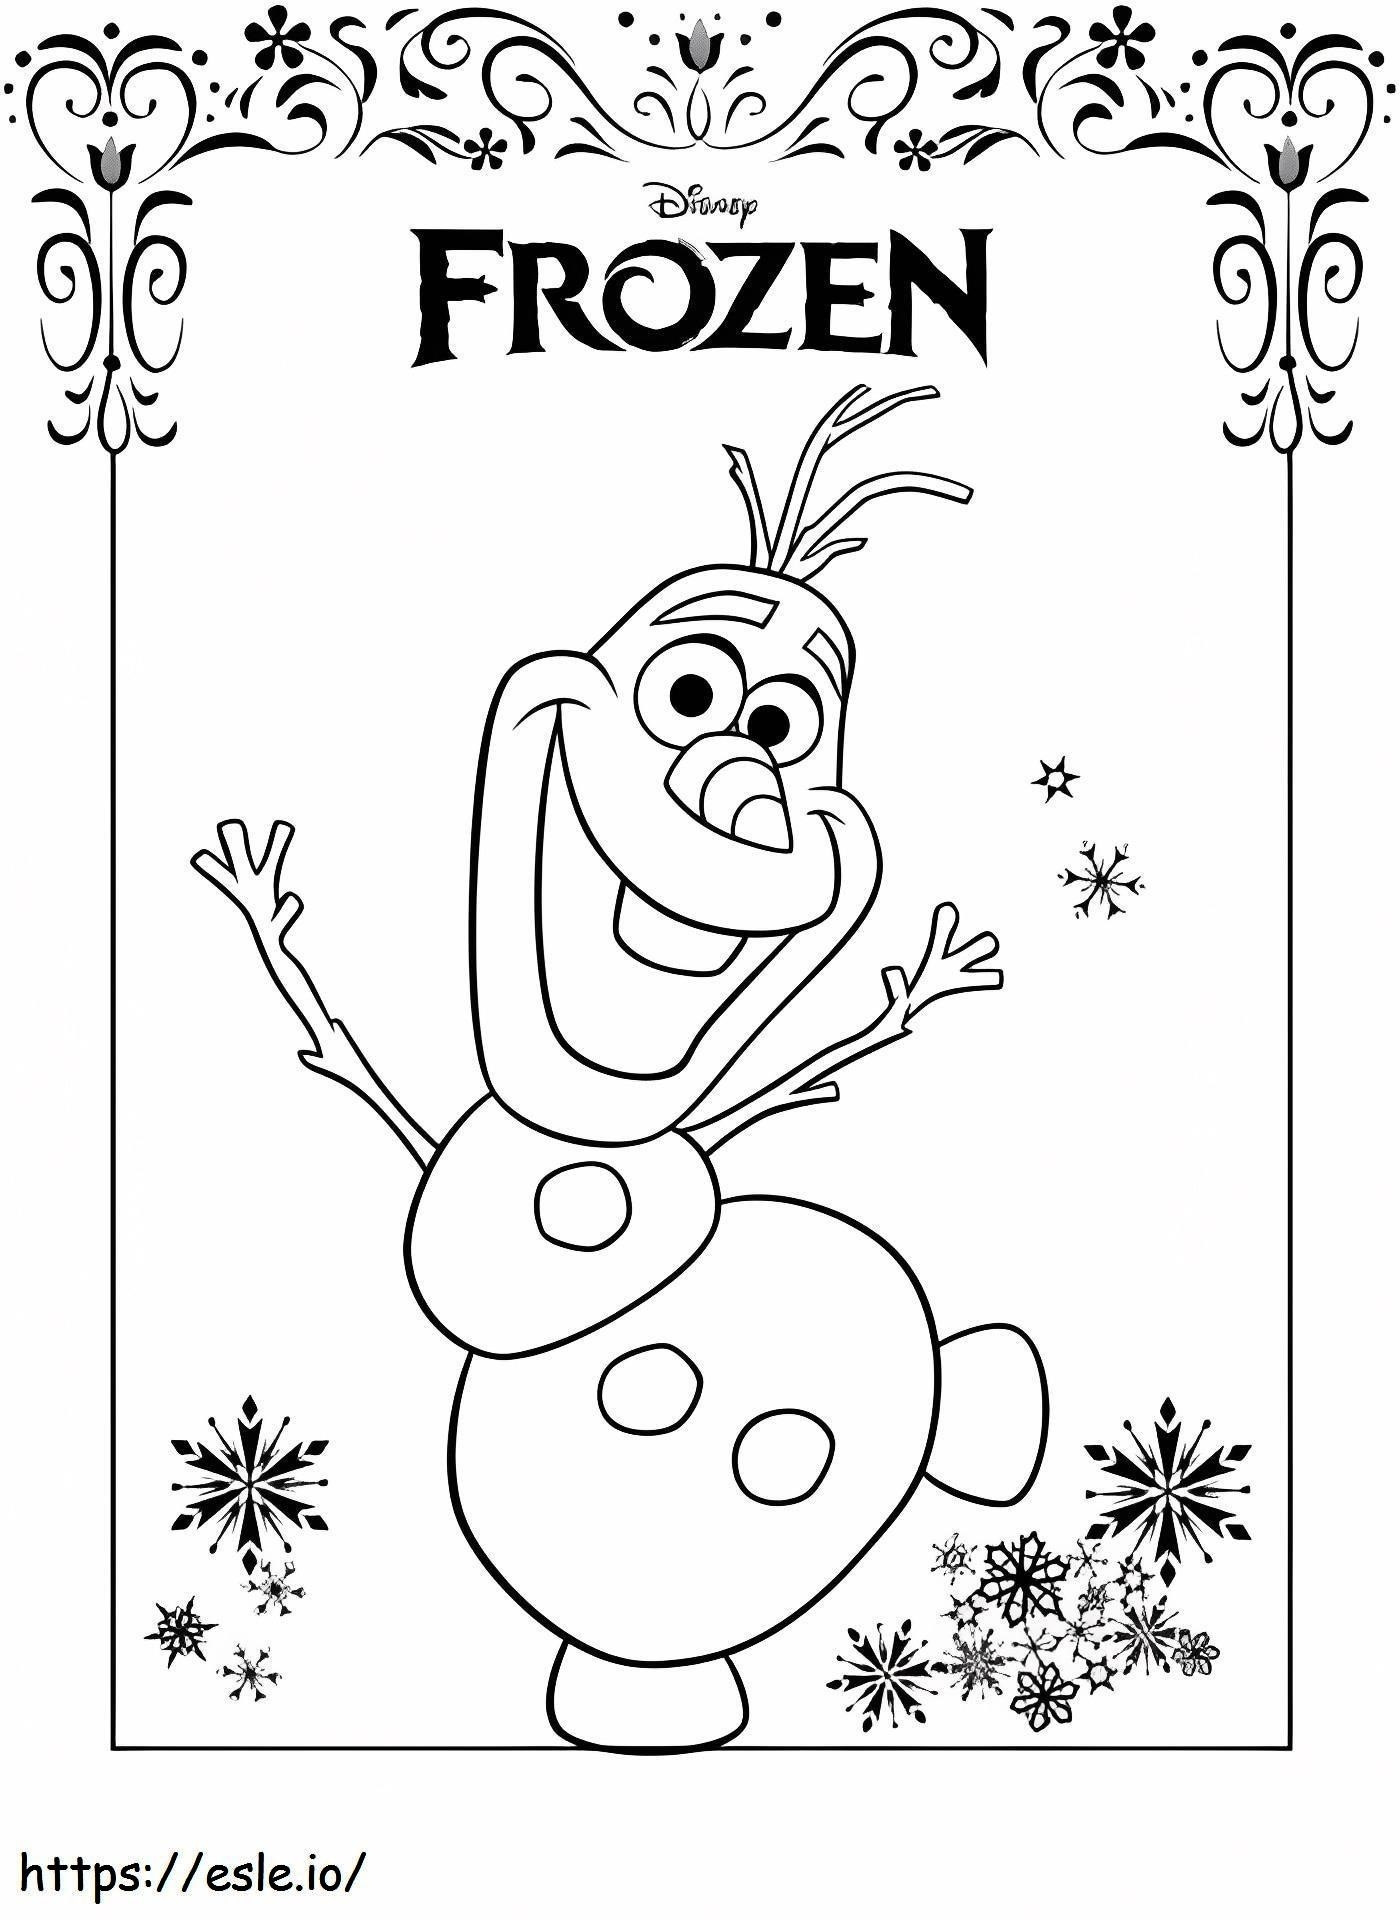 Olaf Frozen ausmalbilder